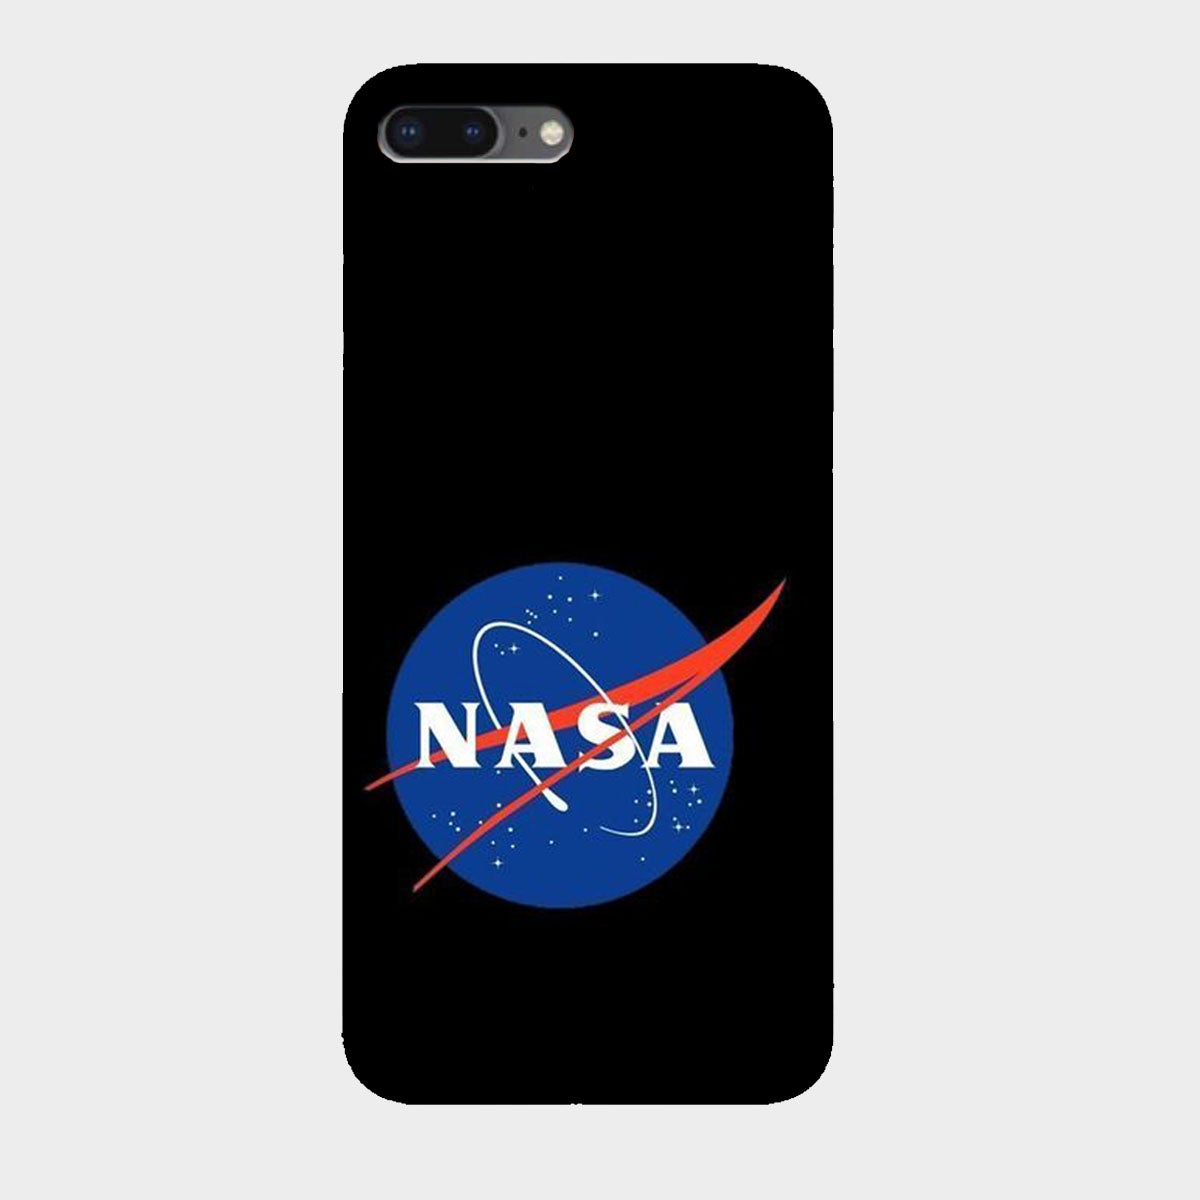 Nasa - Mobile Phone Cover - Hard Case